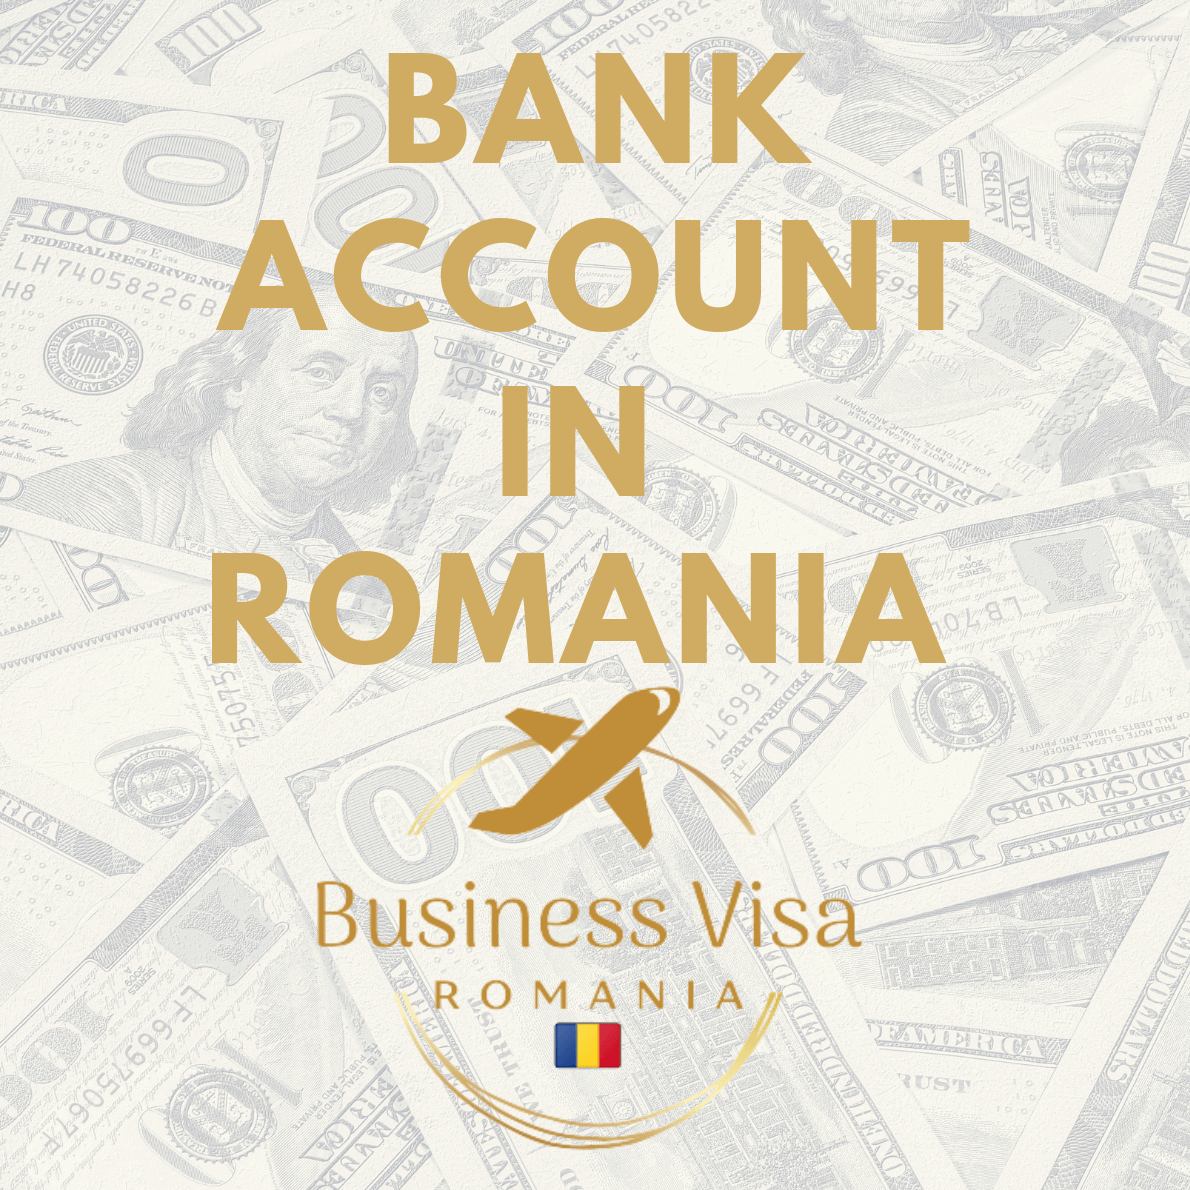 Bank Account in Romania